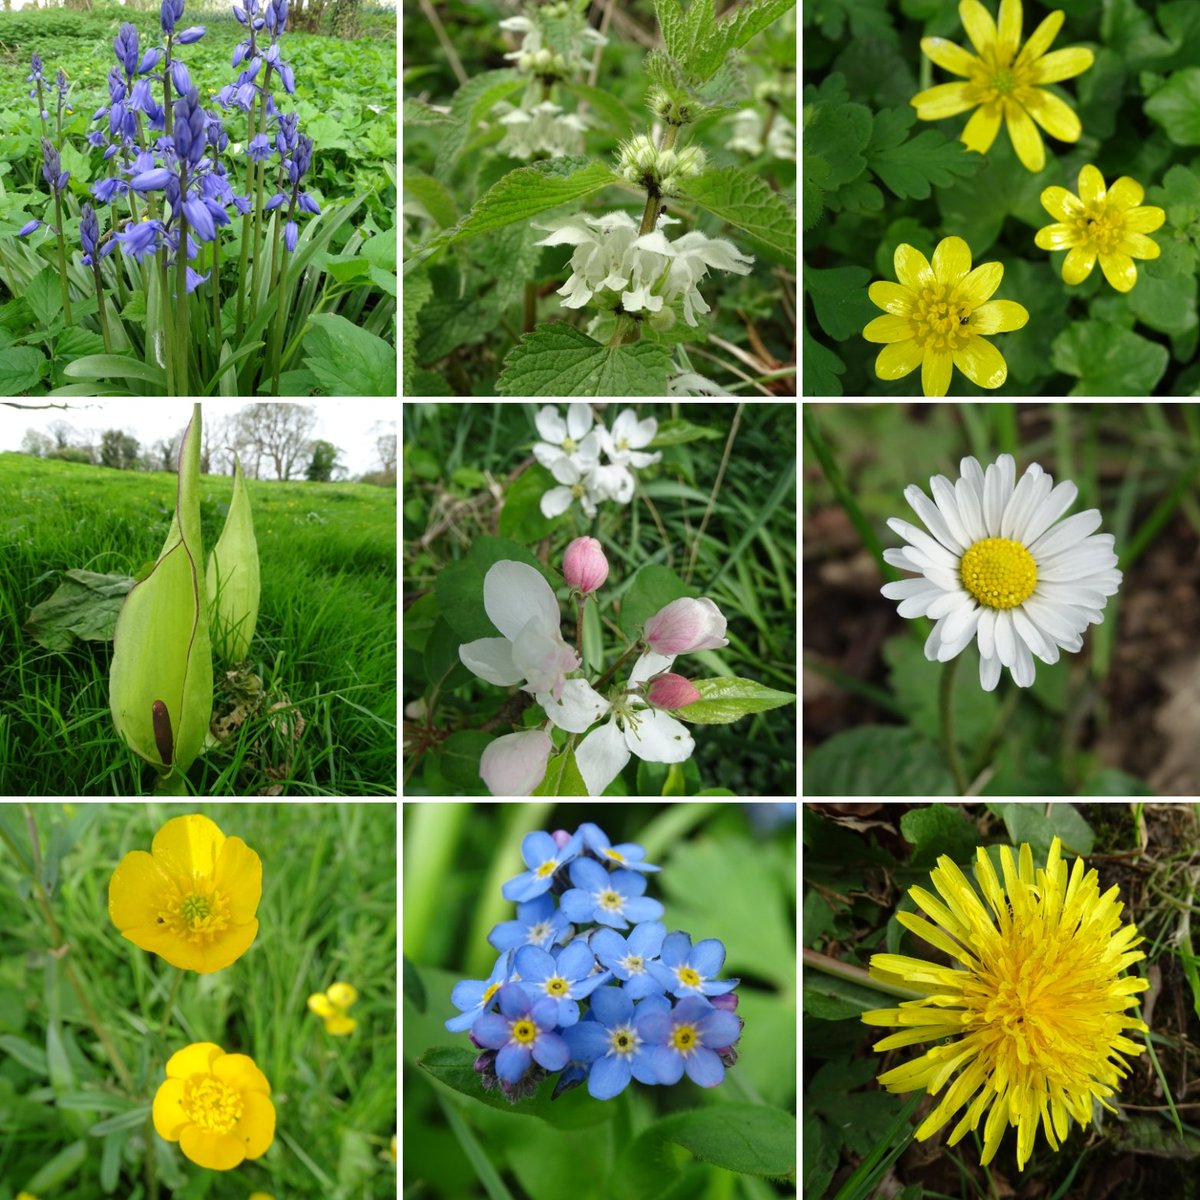 Today's wildflowers #flowers #wildflowers #blossoms #blooms #springflowers #spring #flora #floribunda #april #walk #walking #yorkshirewolds #eastridingofyorkshire #lovewhereyoulive